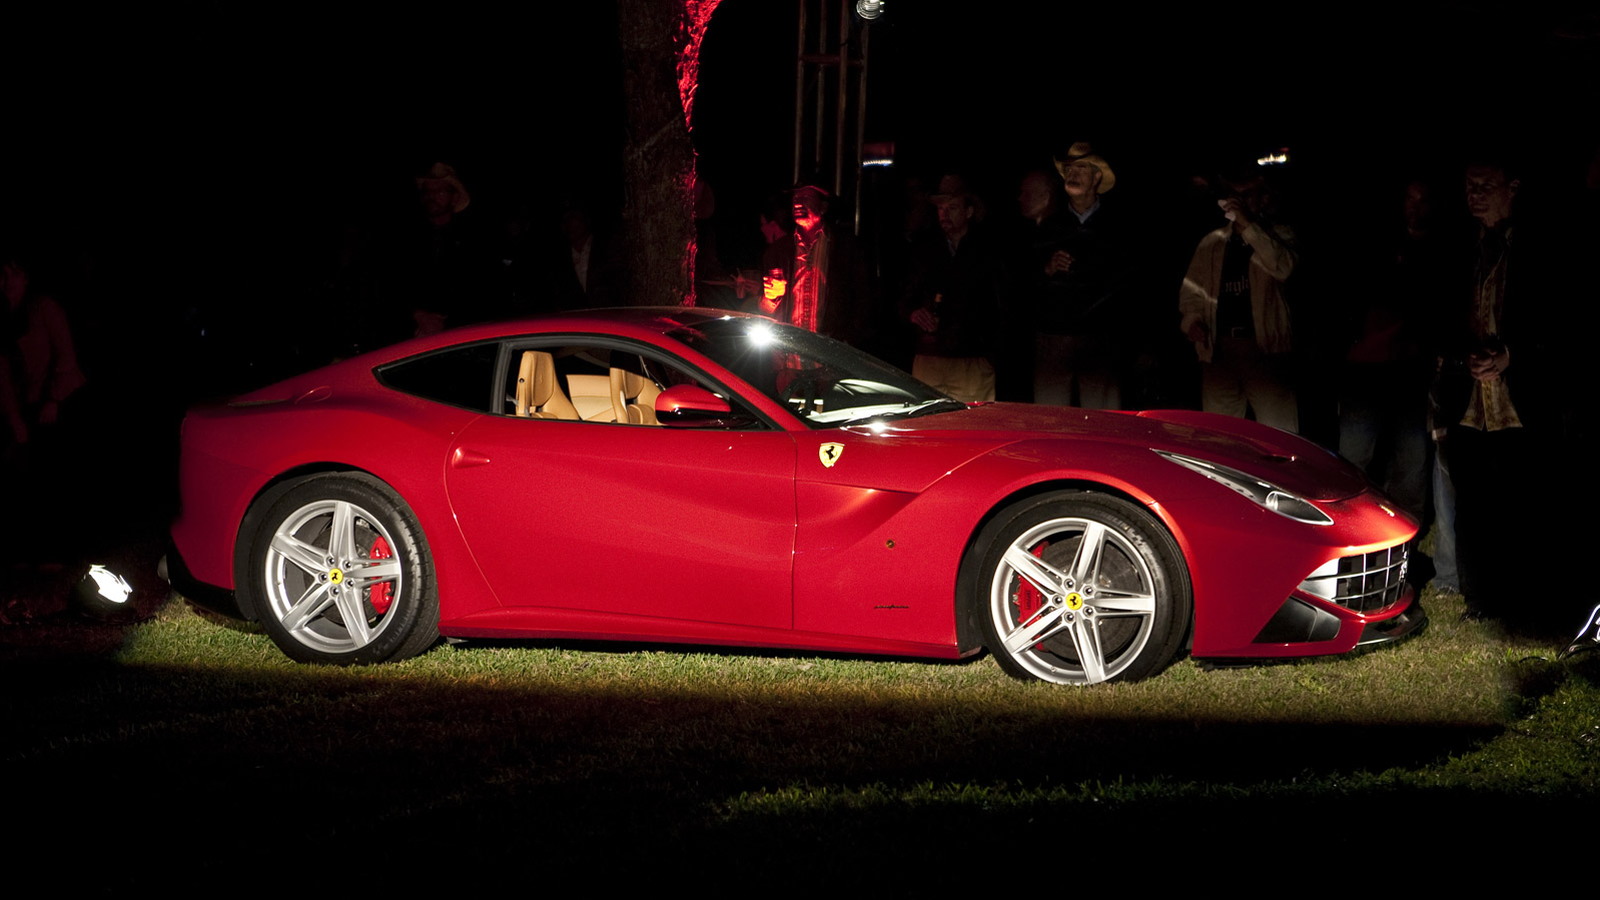 F12 Berlinetta is the highlight at Ferrari event surrounding the 2012 Formula 1 USGP